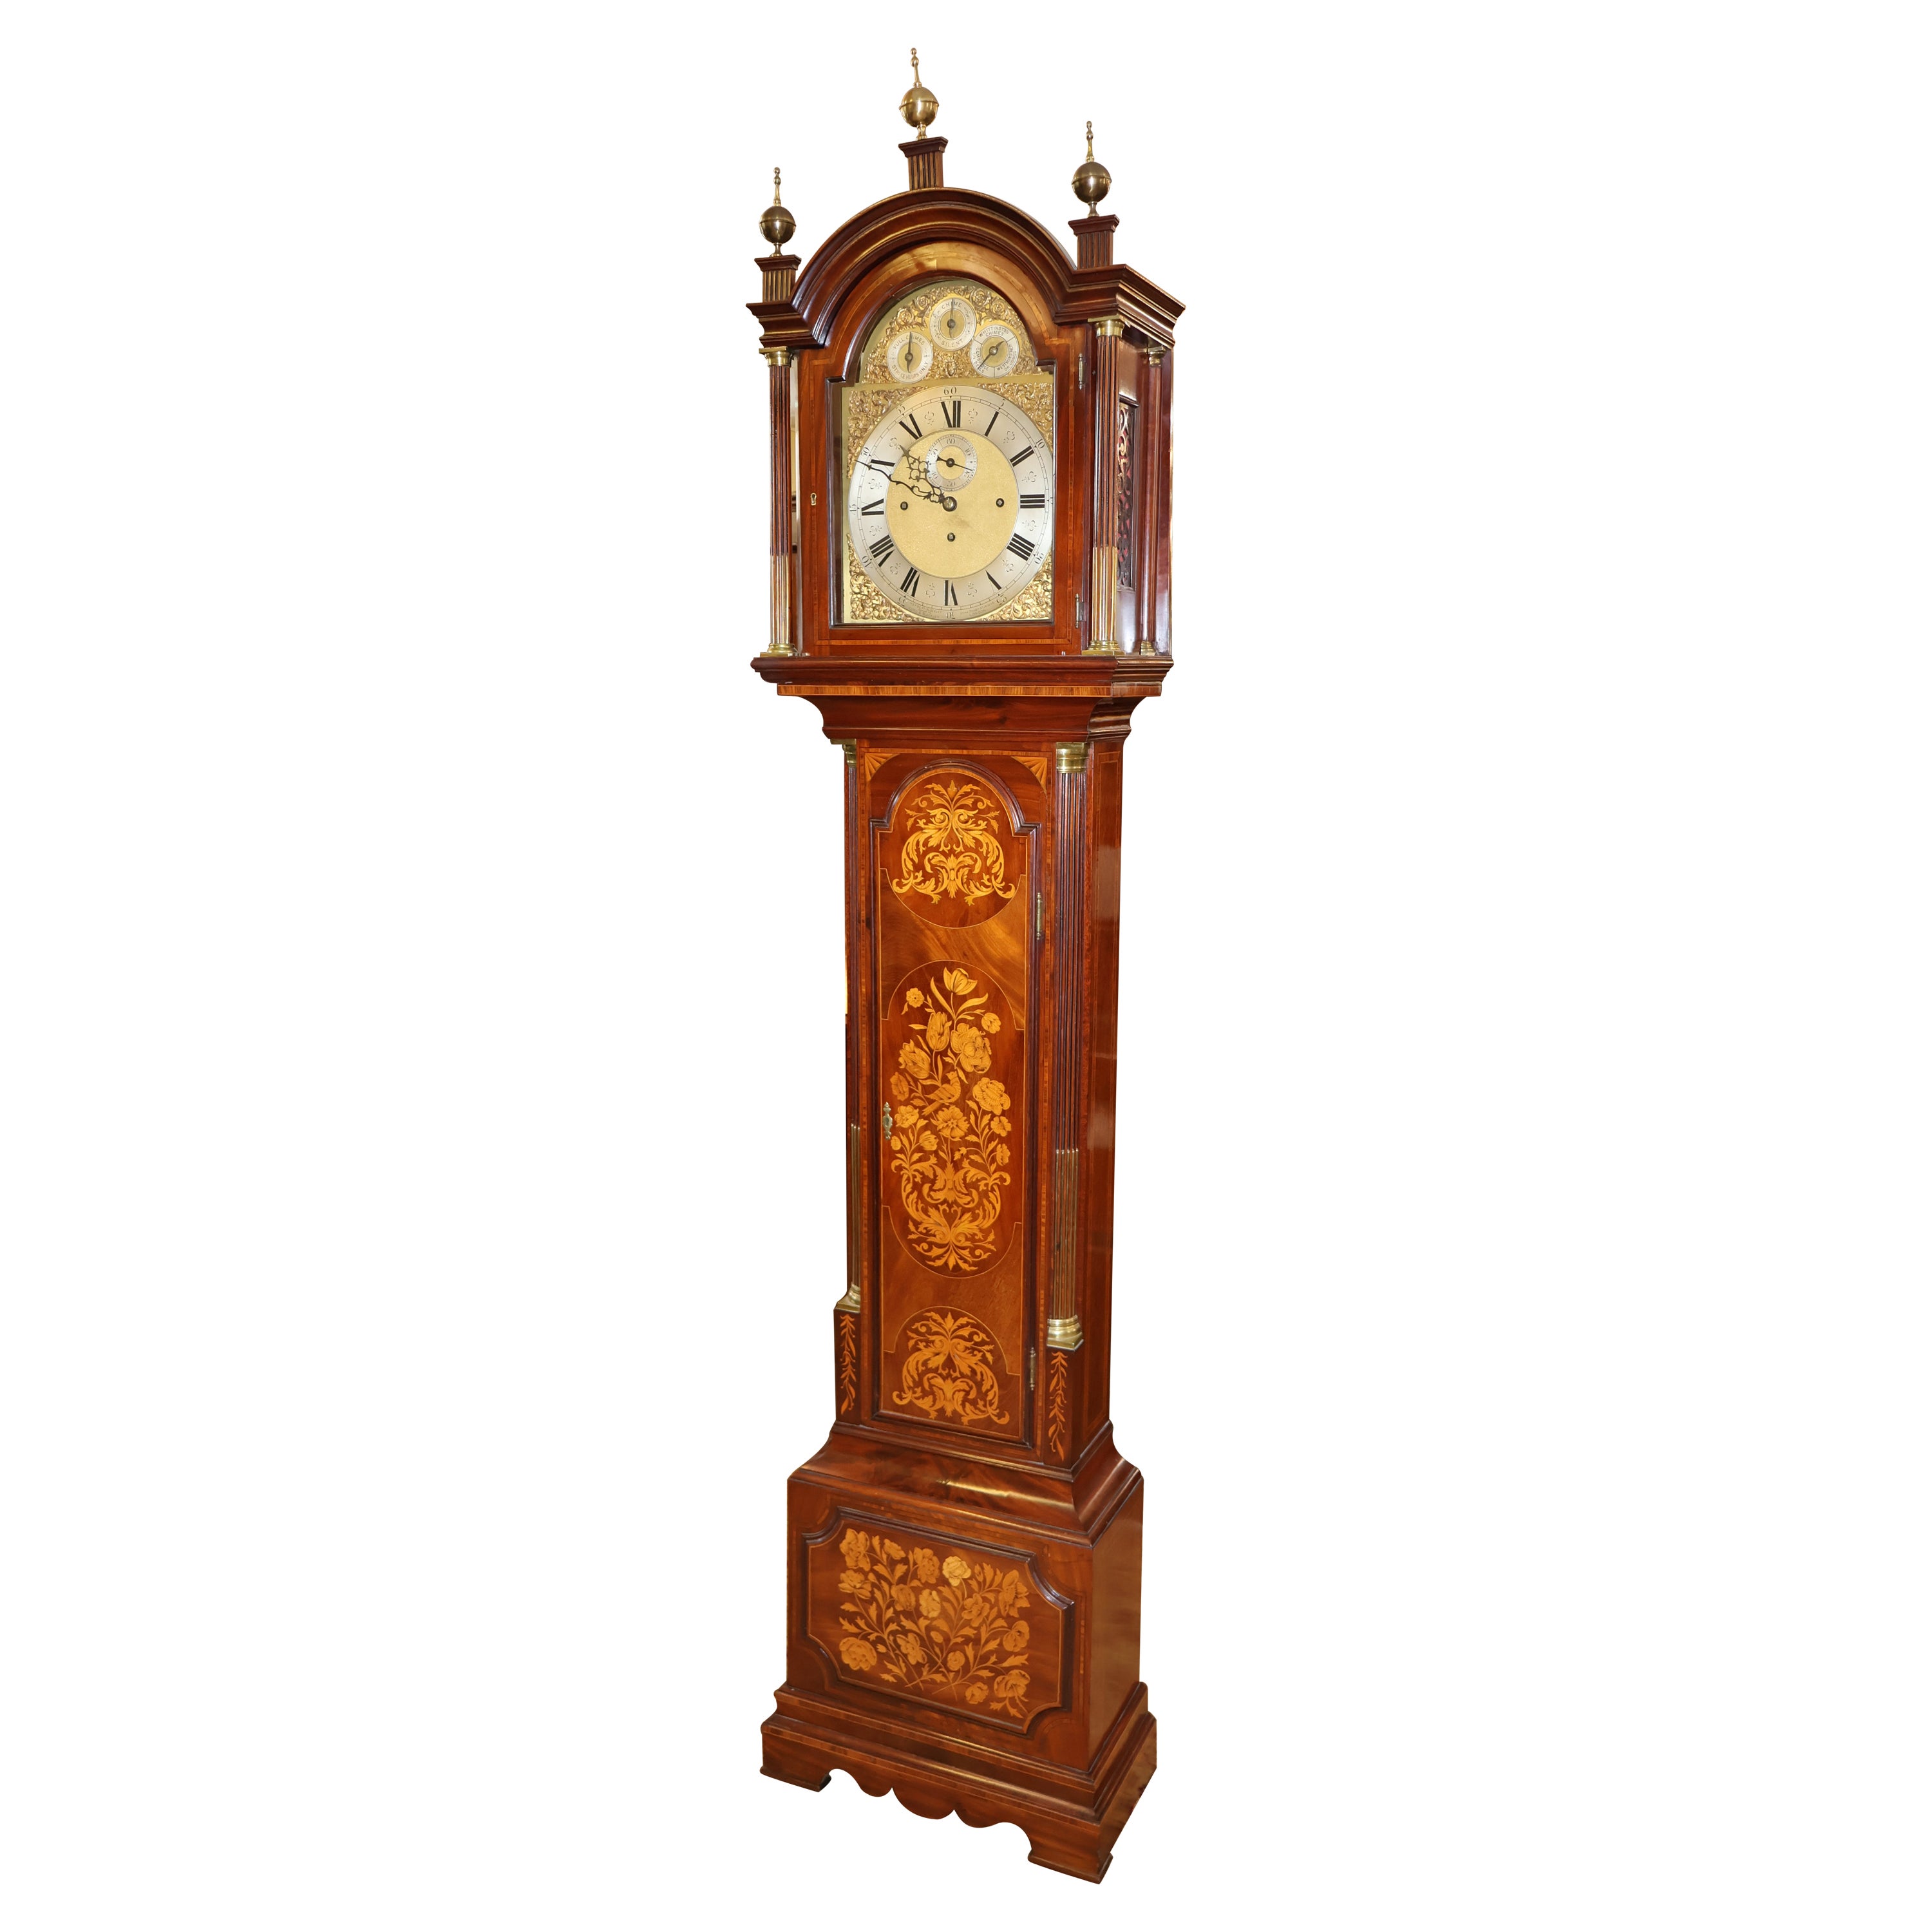 Herbert Blockley London Musical 19th Century Inlaid Tall Case Grandfather Clock